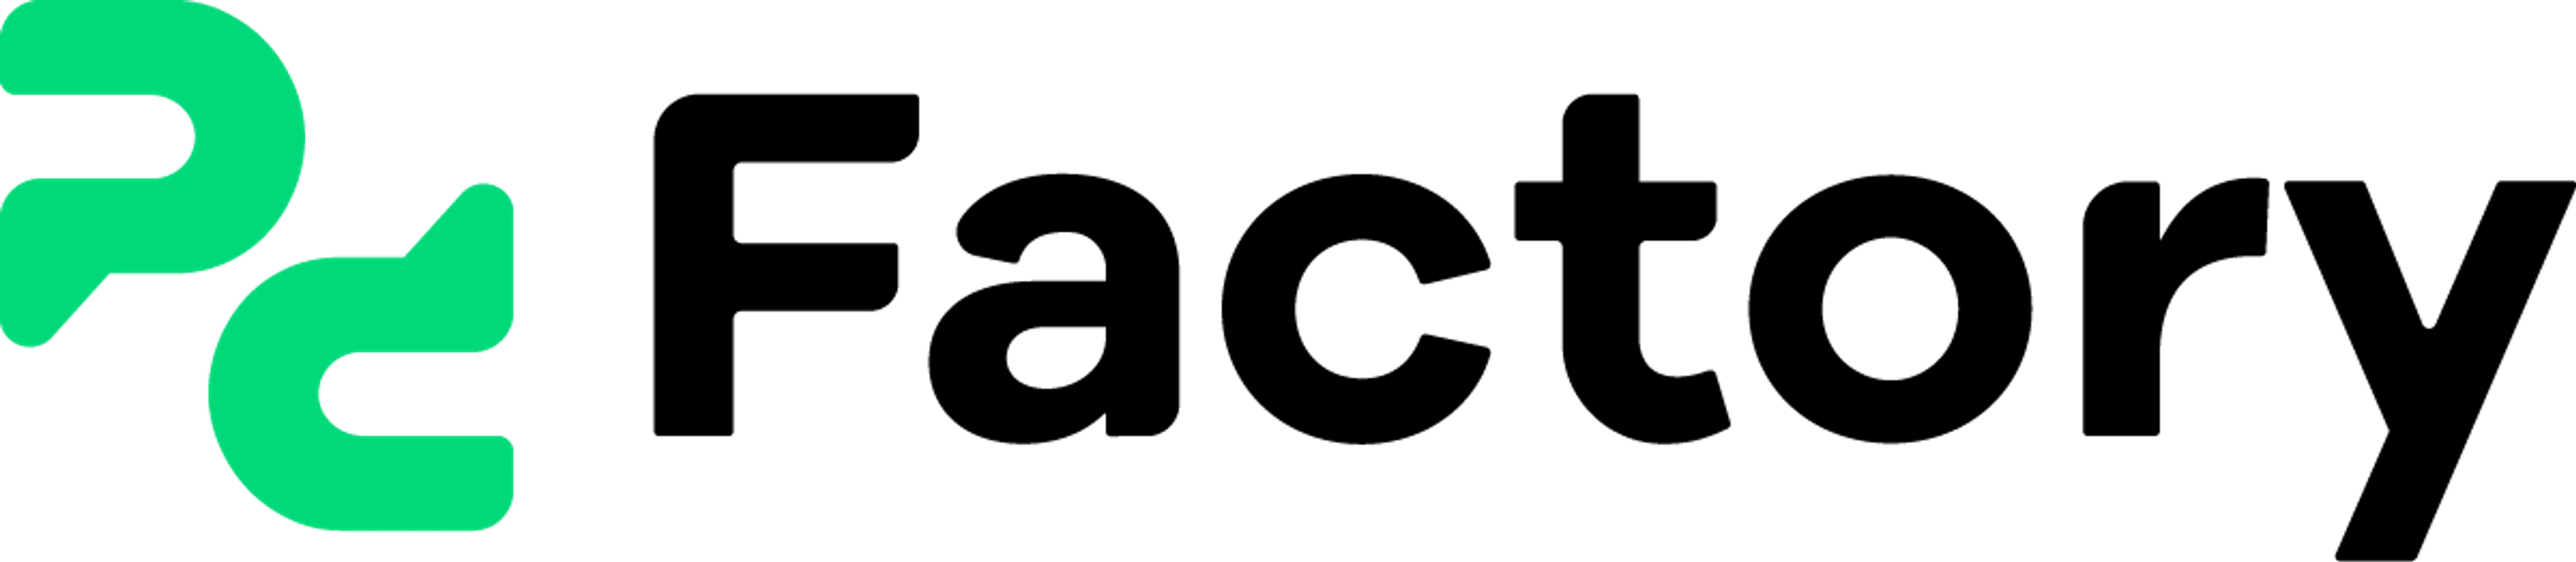 PC FACTORY logo